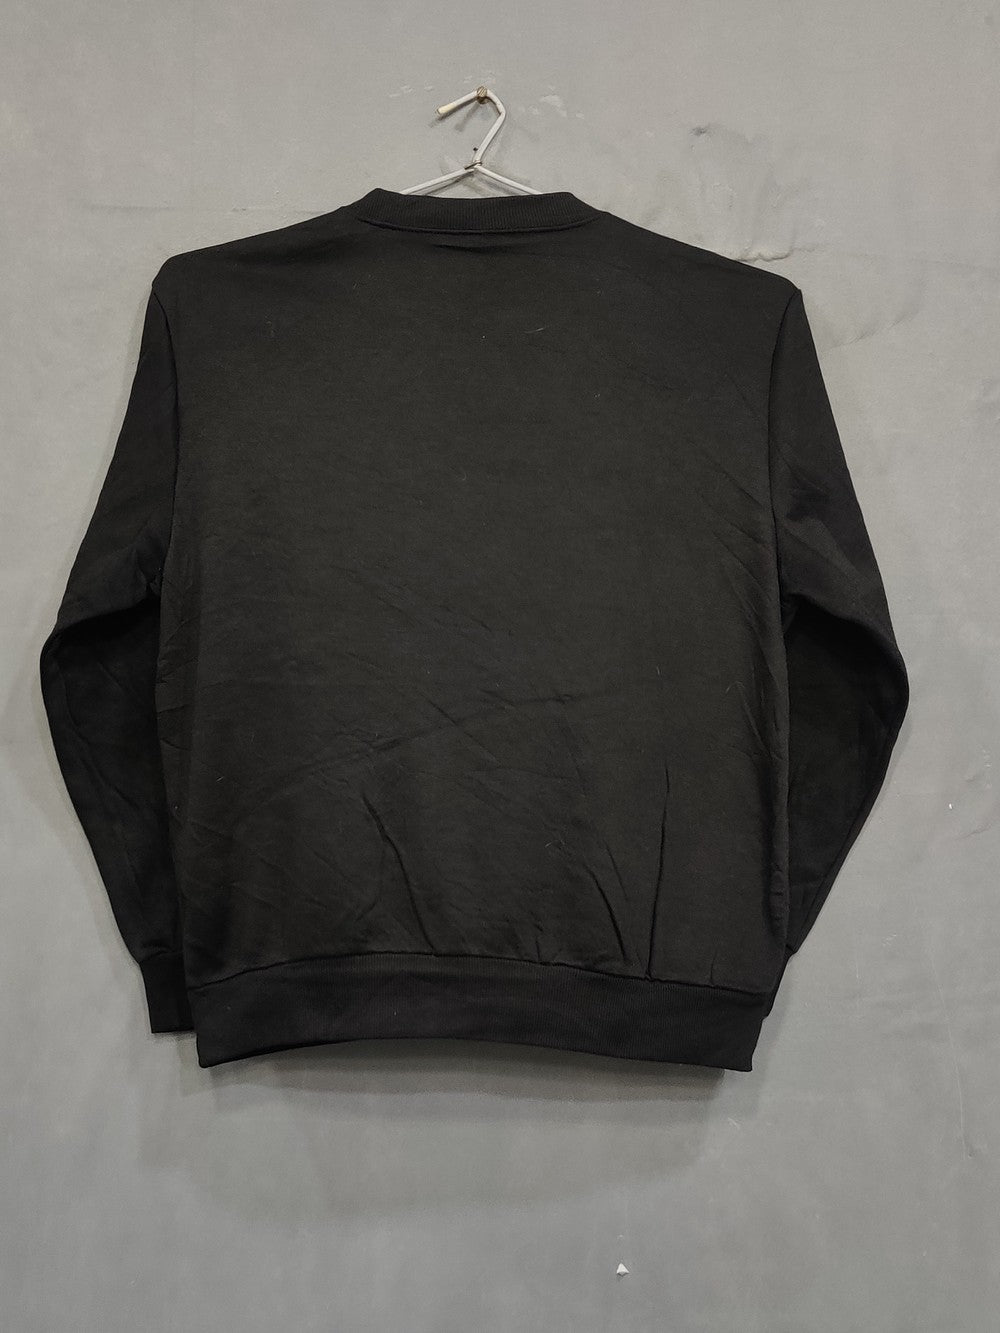 Uniqlo Dry Branded Original For Men Sweatshirt Tracksuits